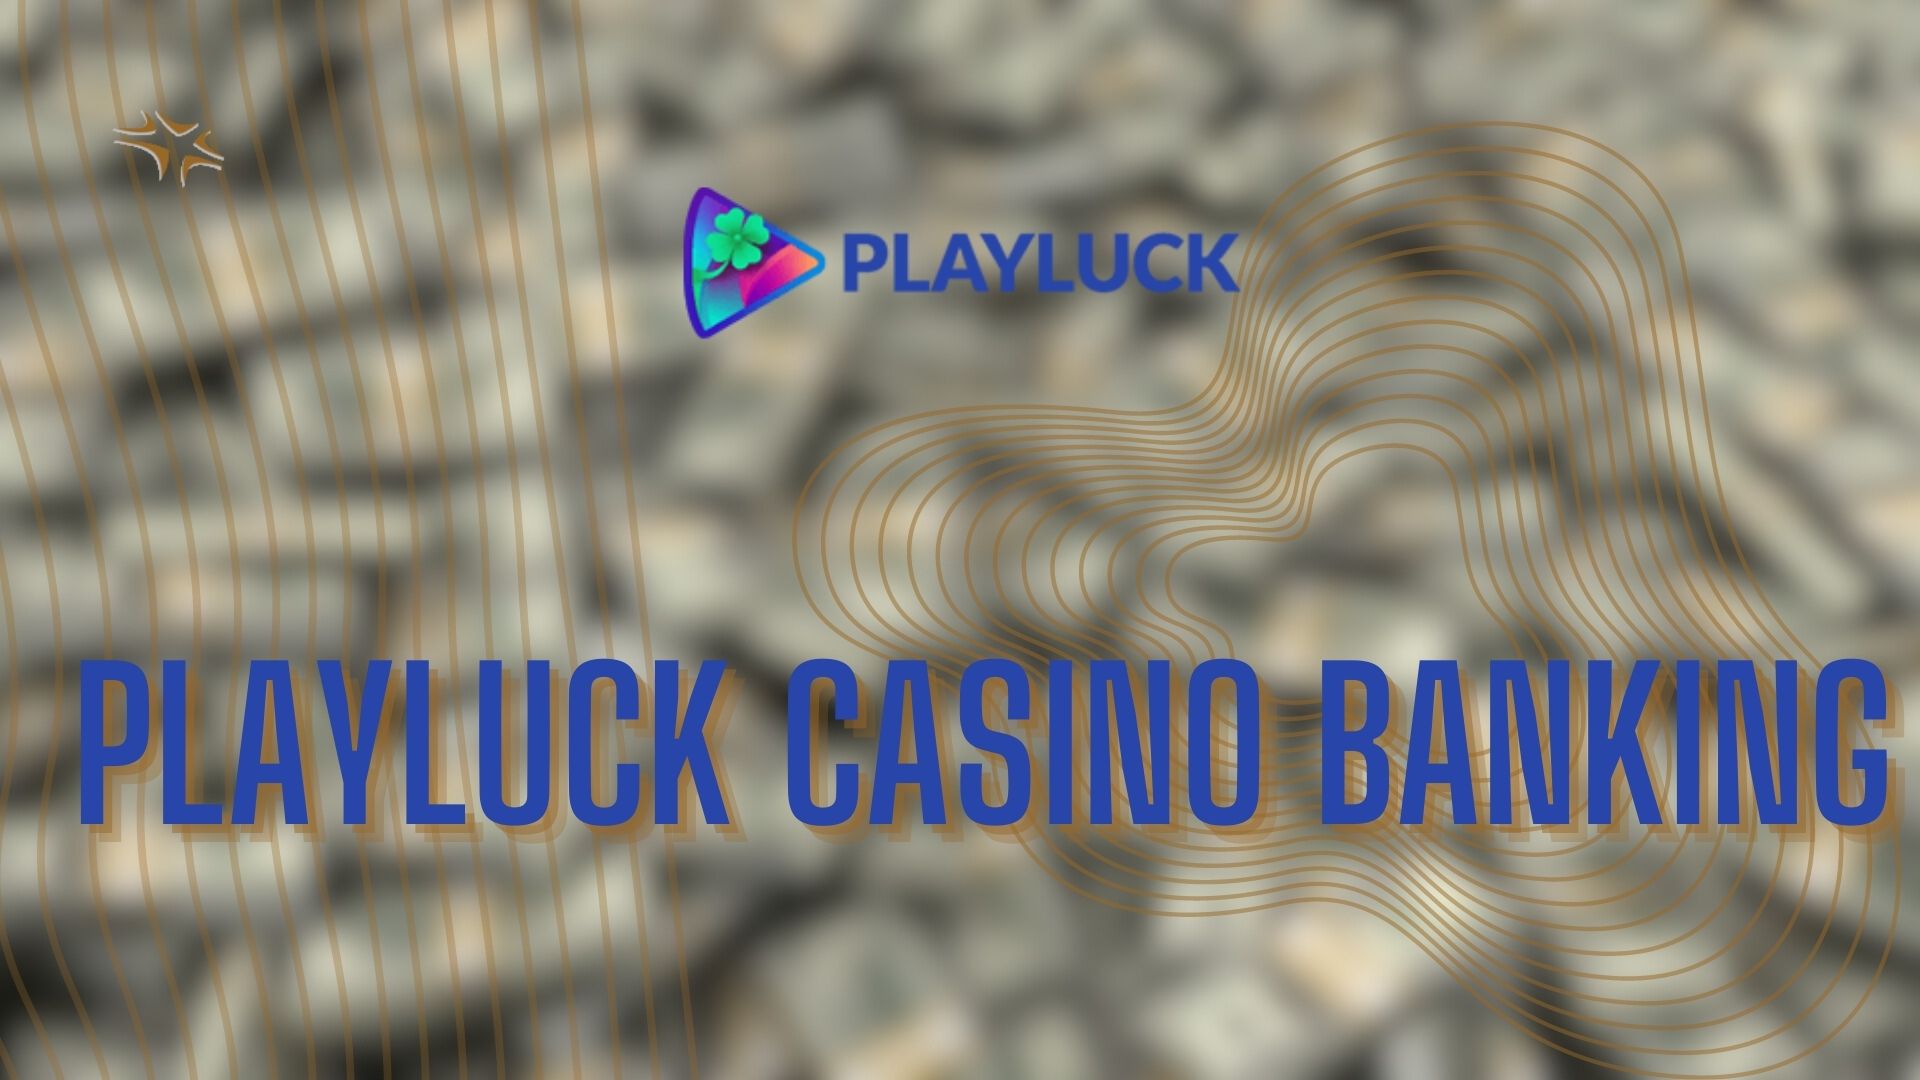 Playluck Casino Banking